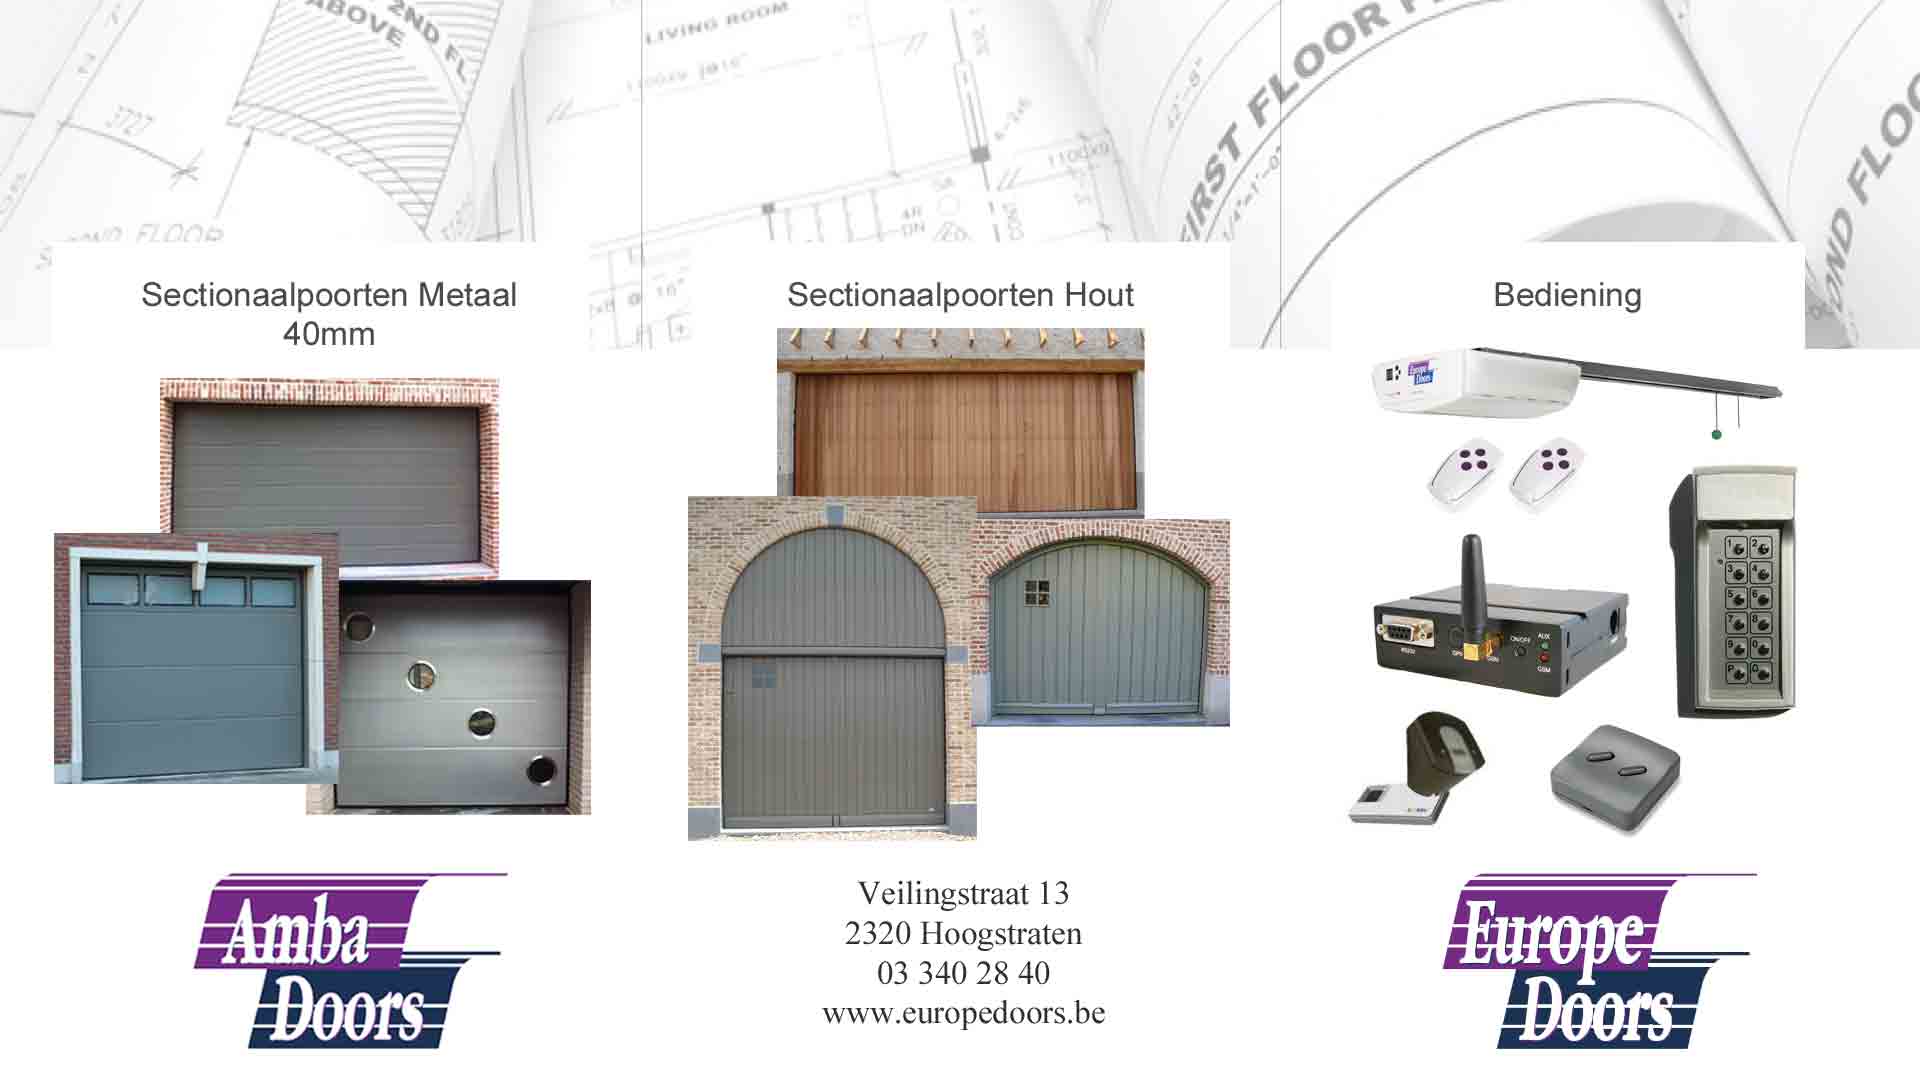 garagepoortinstallateurs Oostmalle Europe Doors NV - Amba Doors NV